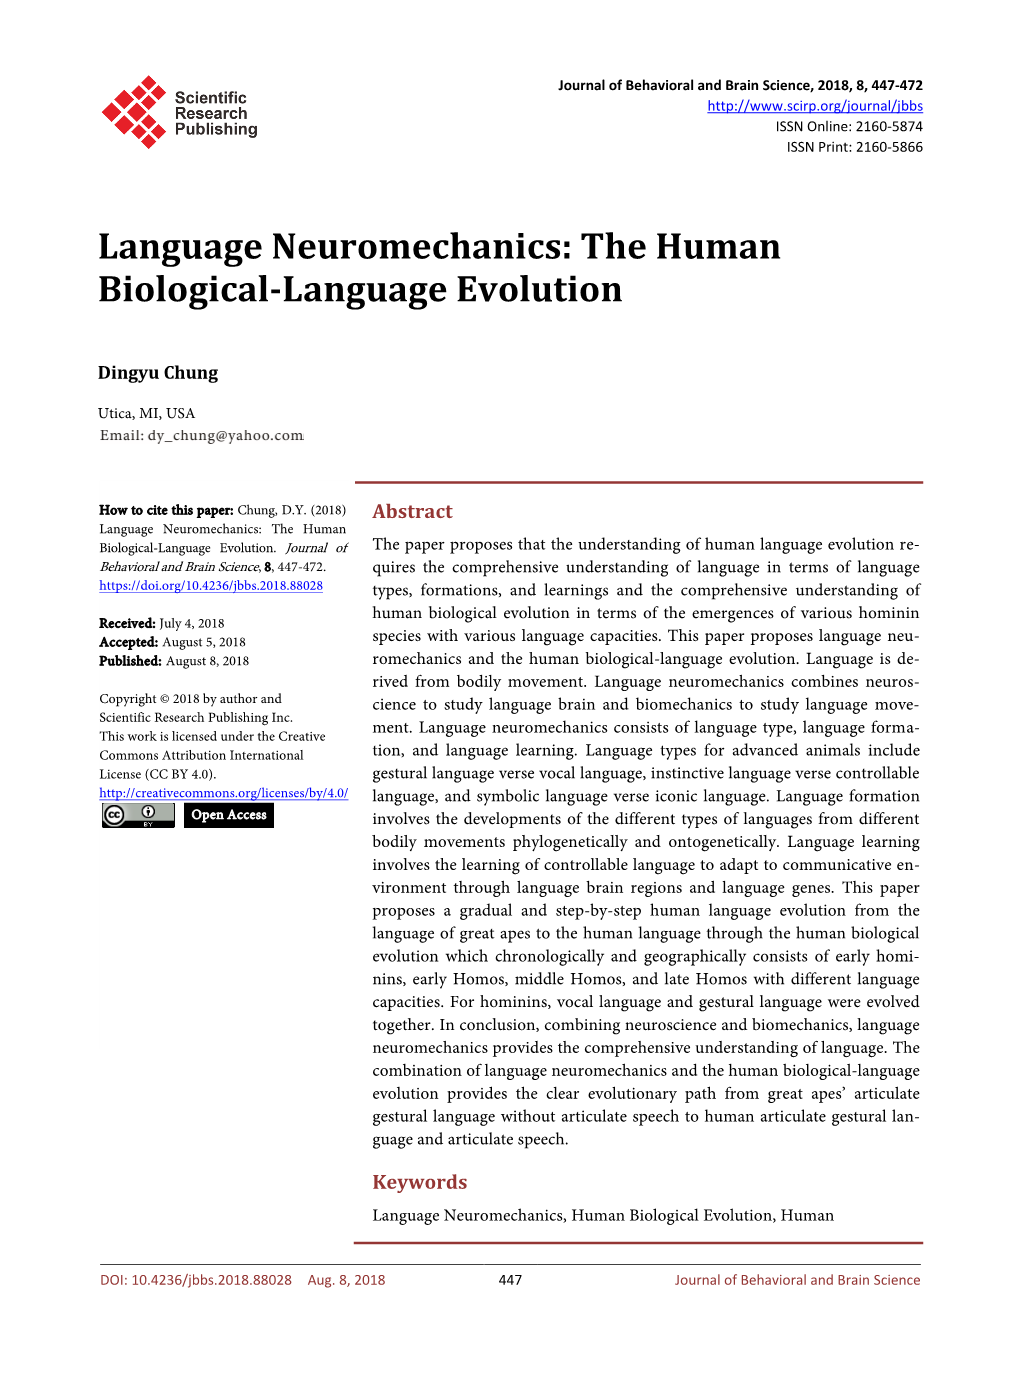 The Human Biological-Language Evolution